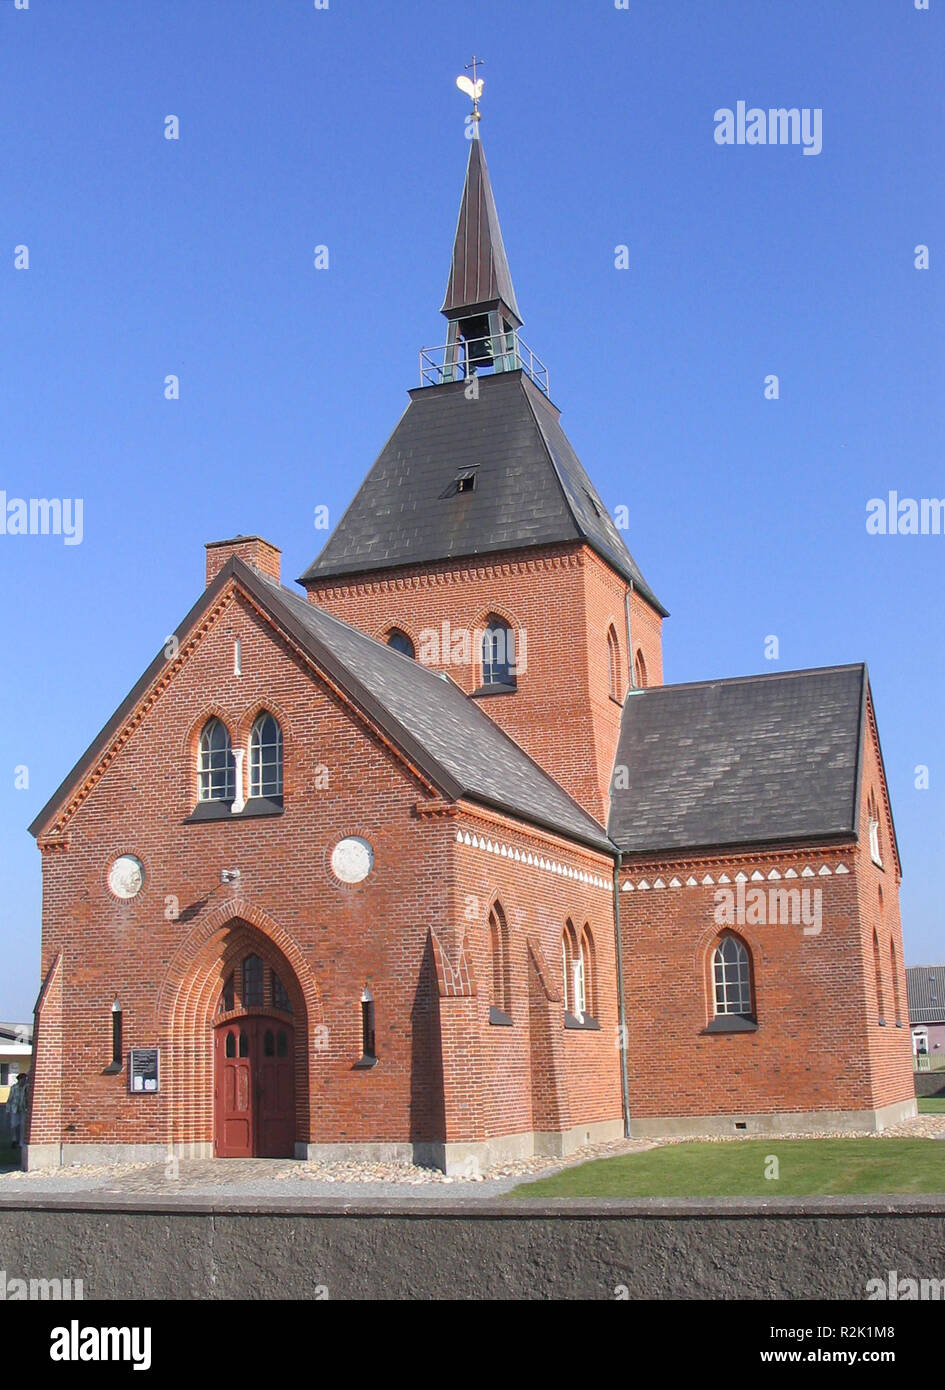 church in denmark Stock Photo